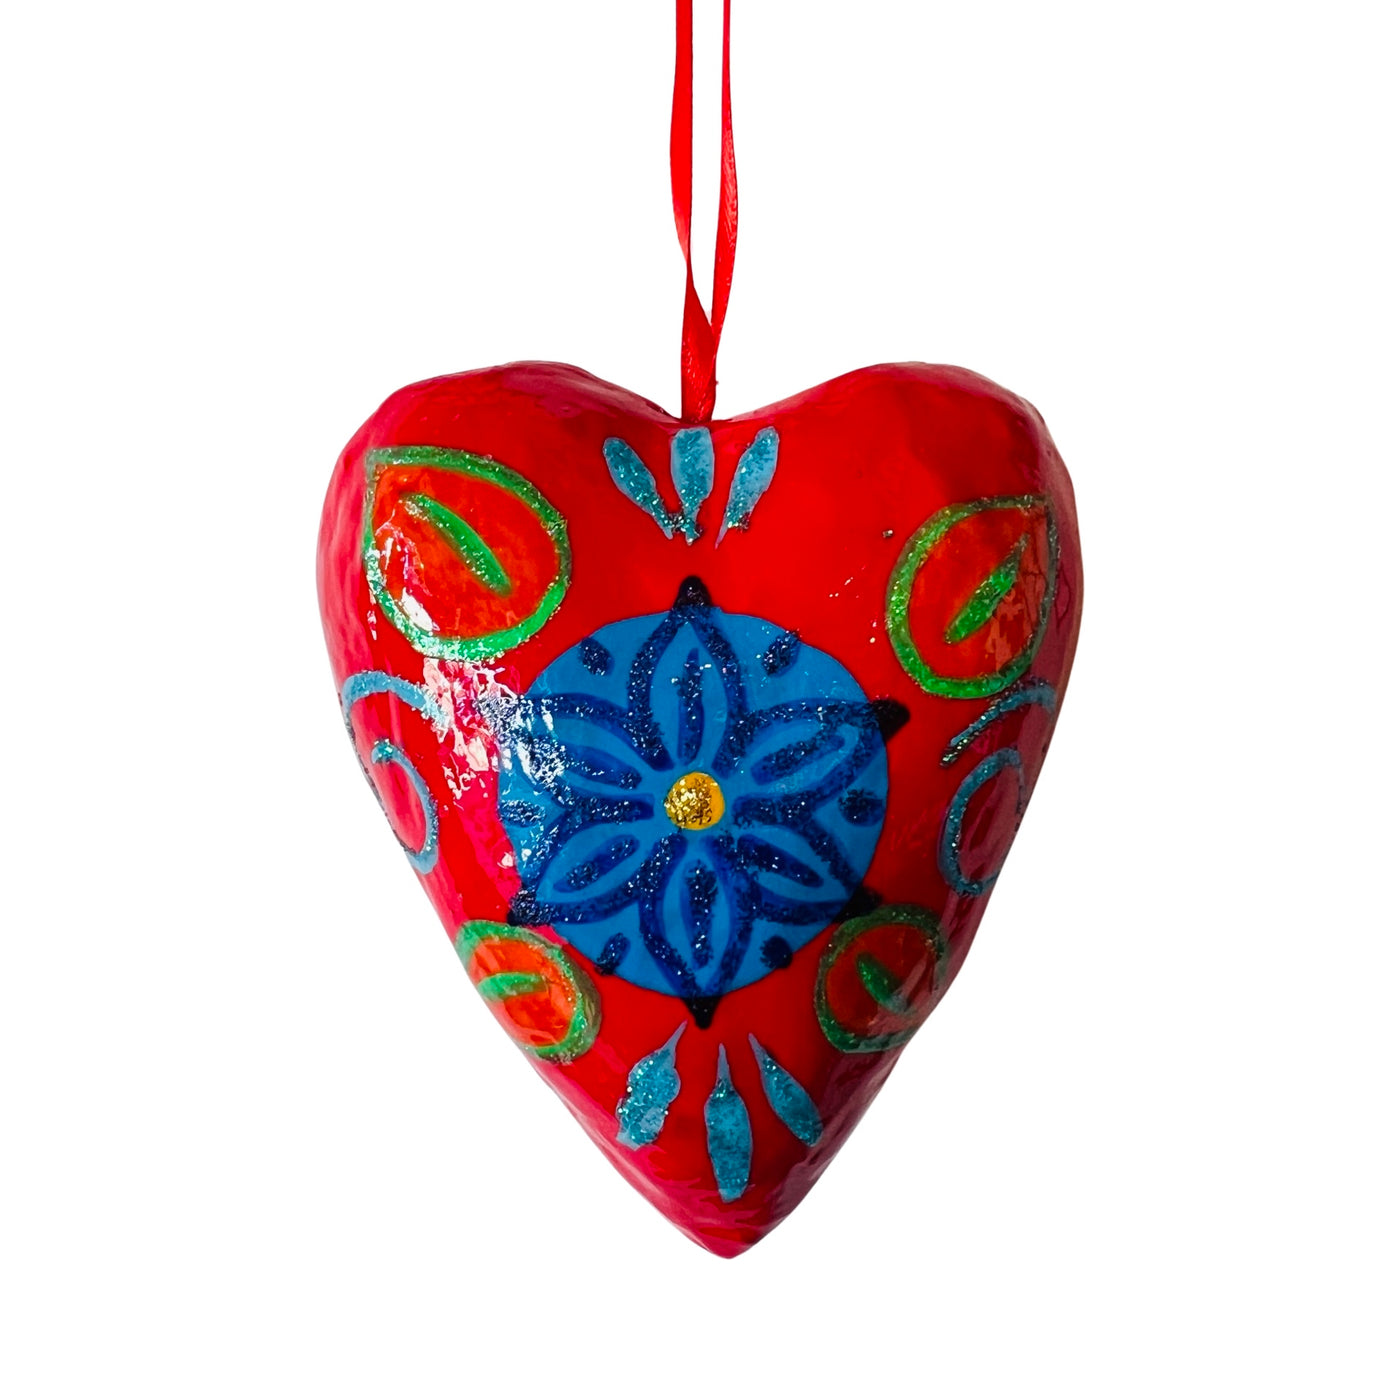 Red paper mache heart with a multi-colored design